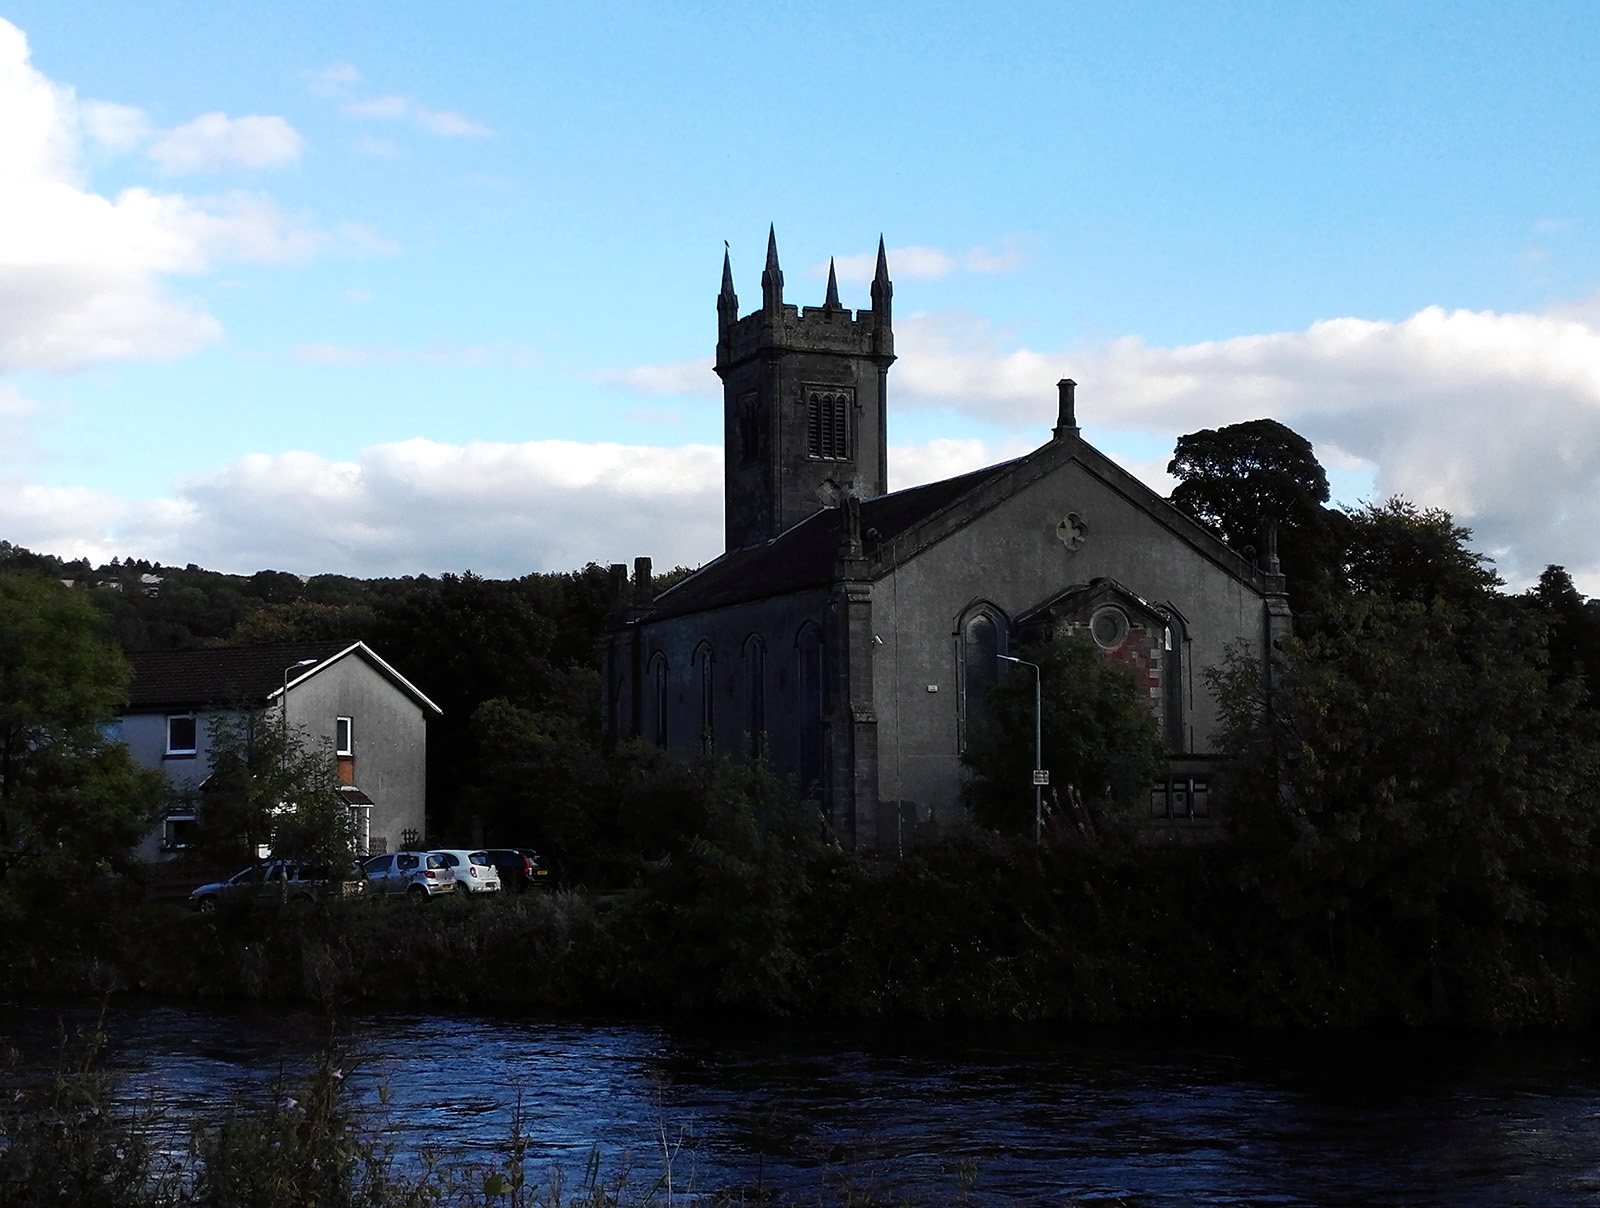 Old the church - river Leven, Scotland